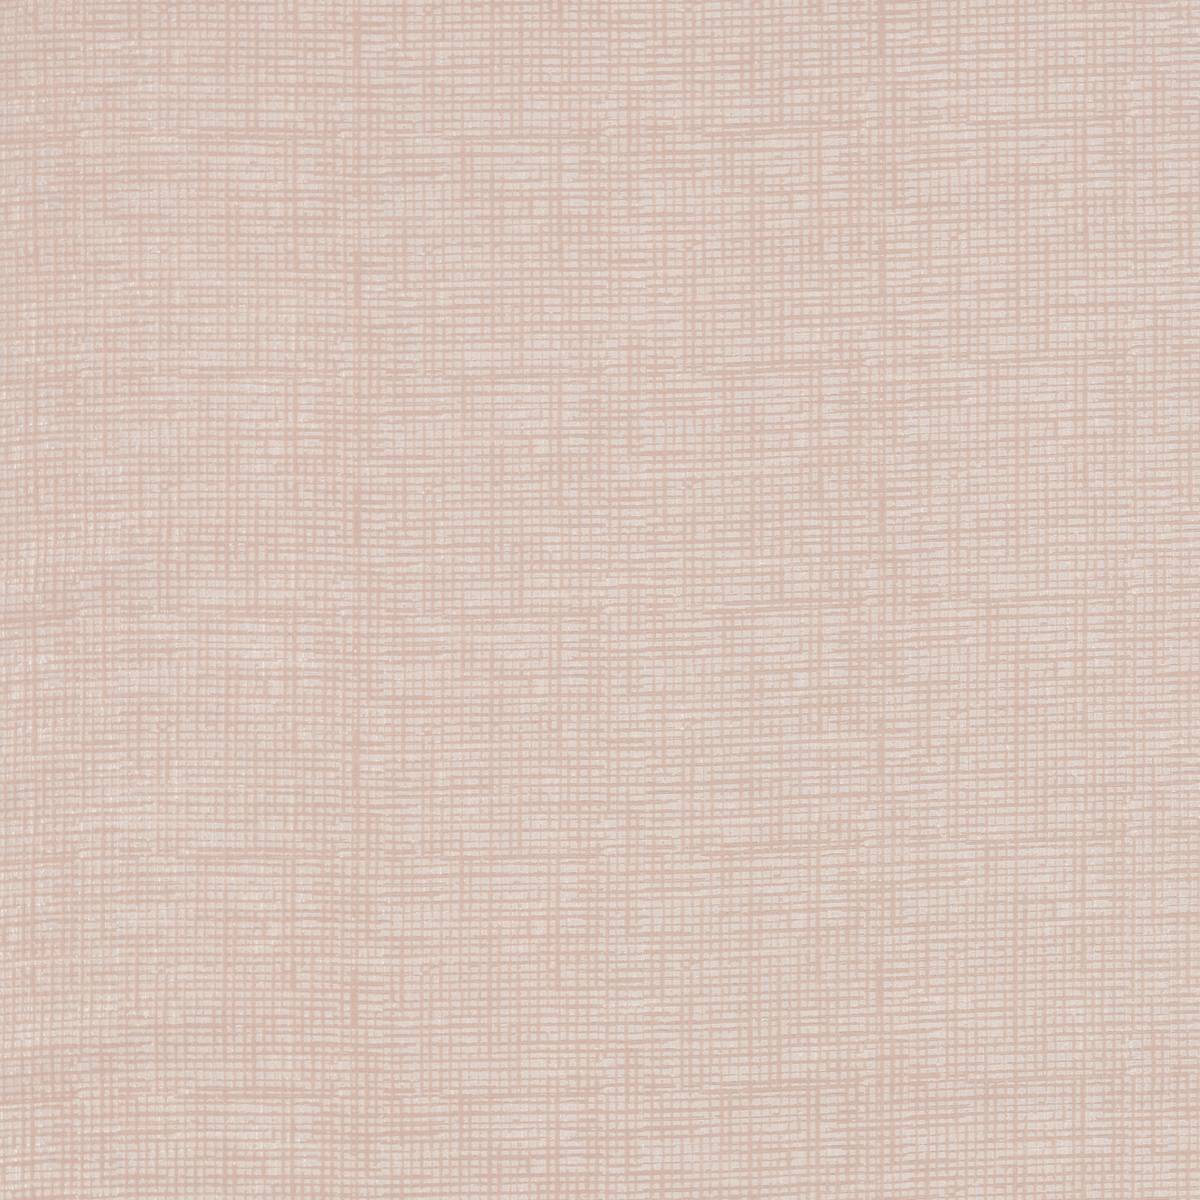 Leno Blush/Chalk Fabric by Harlequin